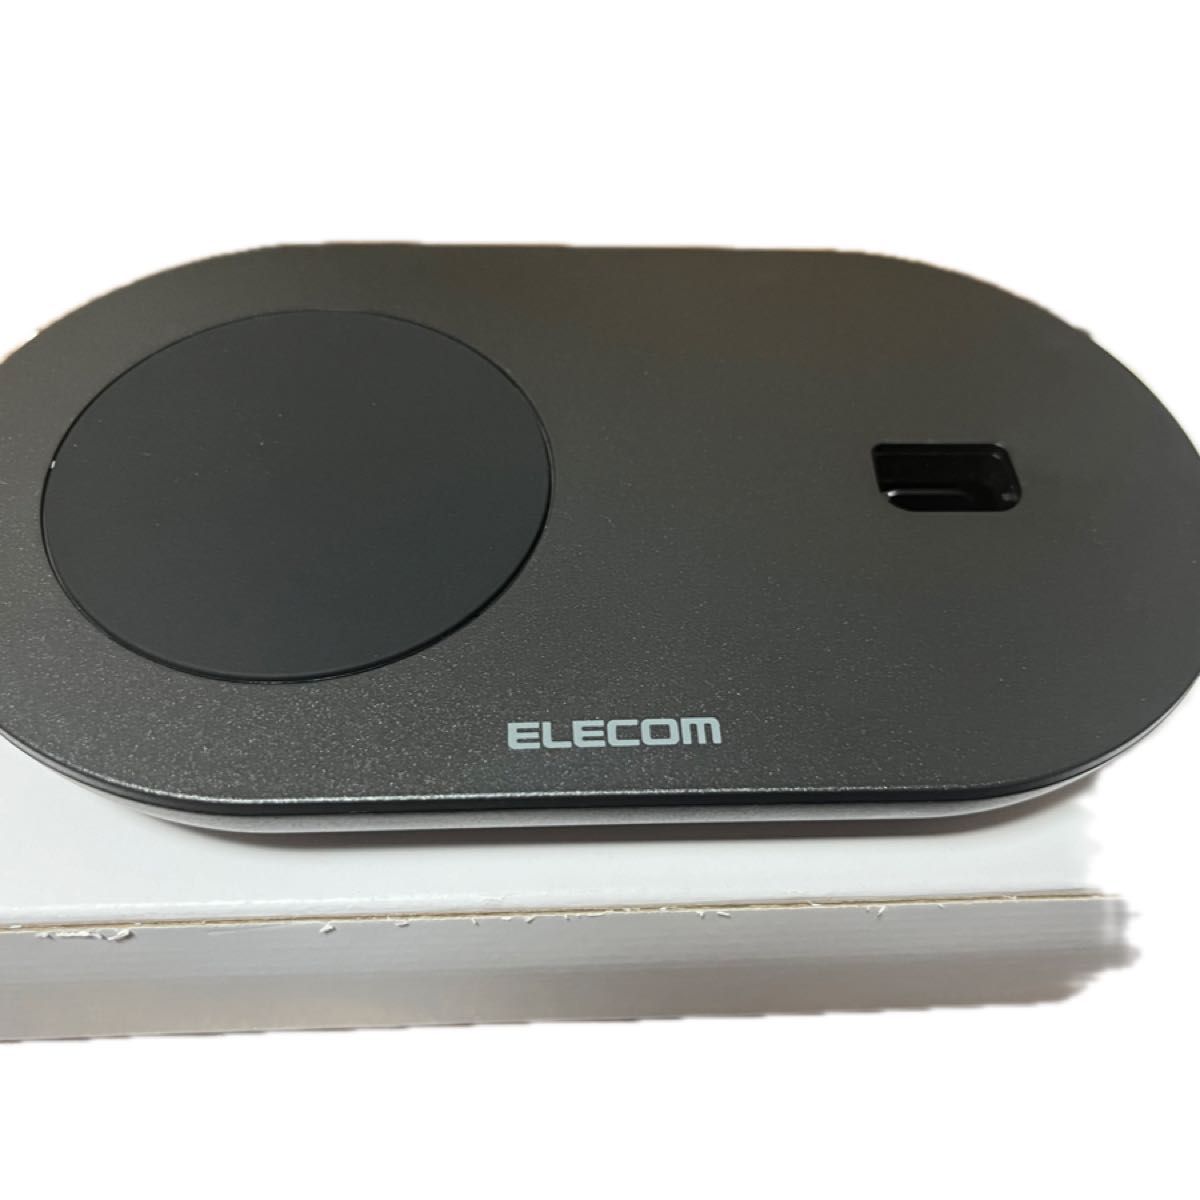 ELECOM ワイヤレス充電器(5W) Apple Watch充電器はめ込み Qi規格対応  W-QA24BK [5W]